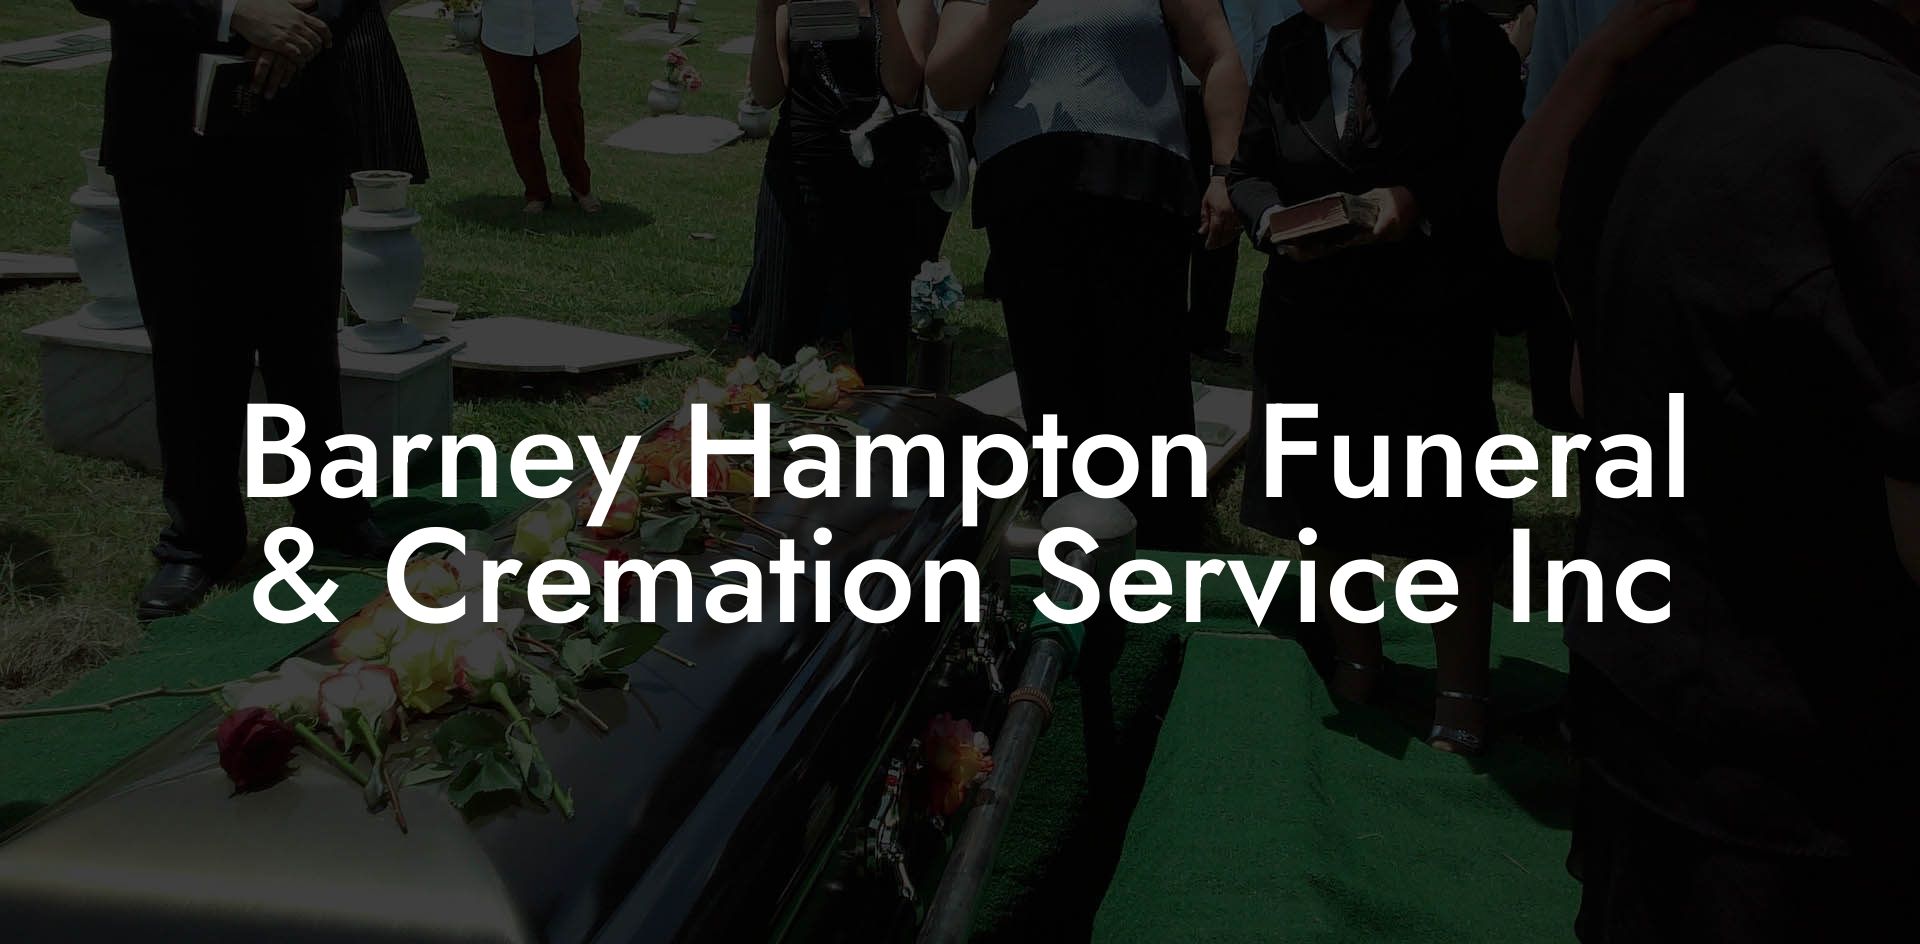 Barney Hampton Funeral & Cremation Service Inc